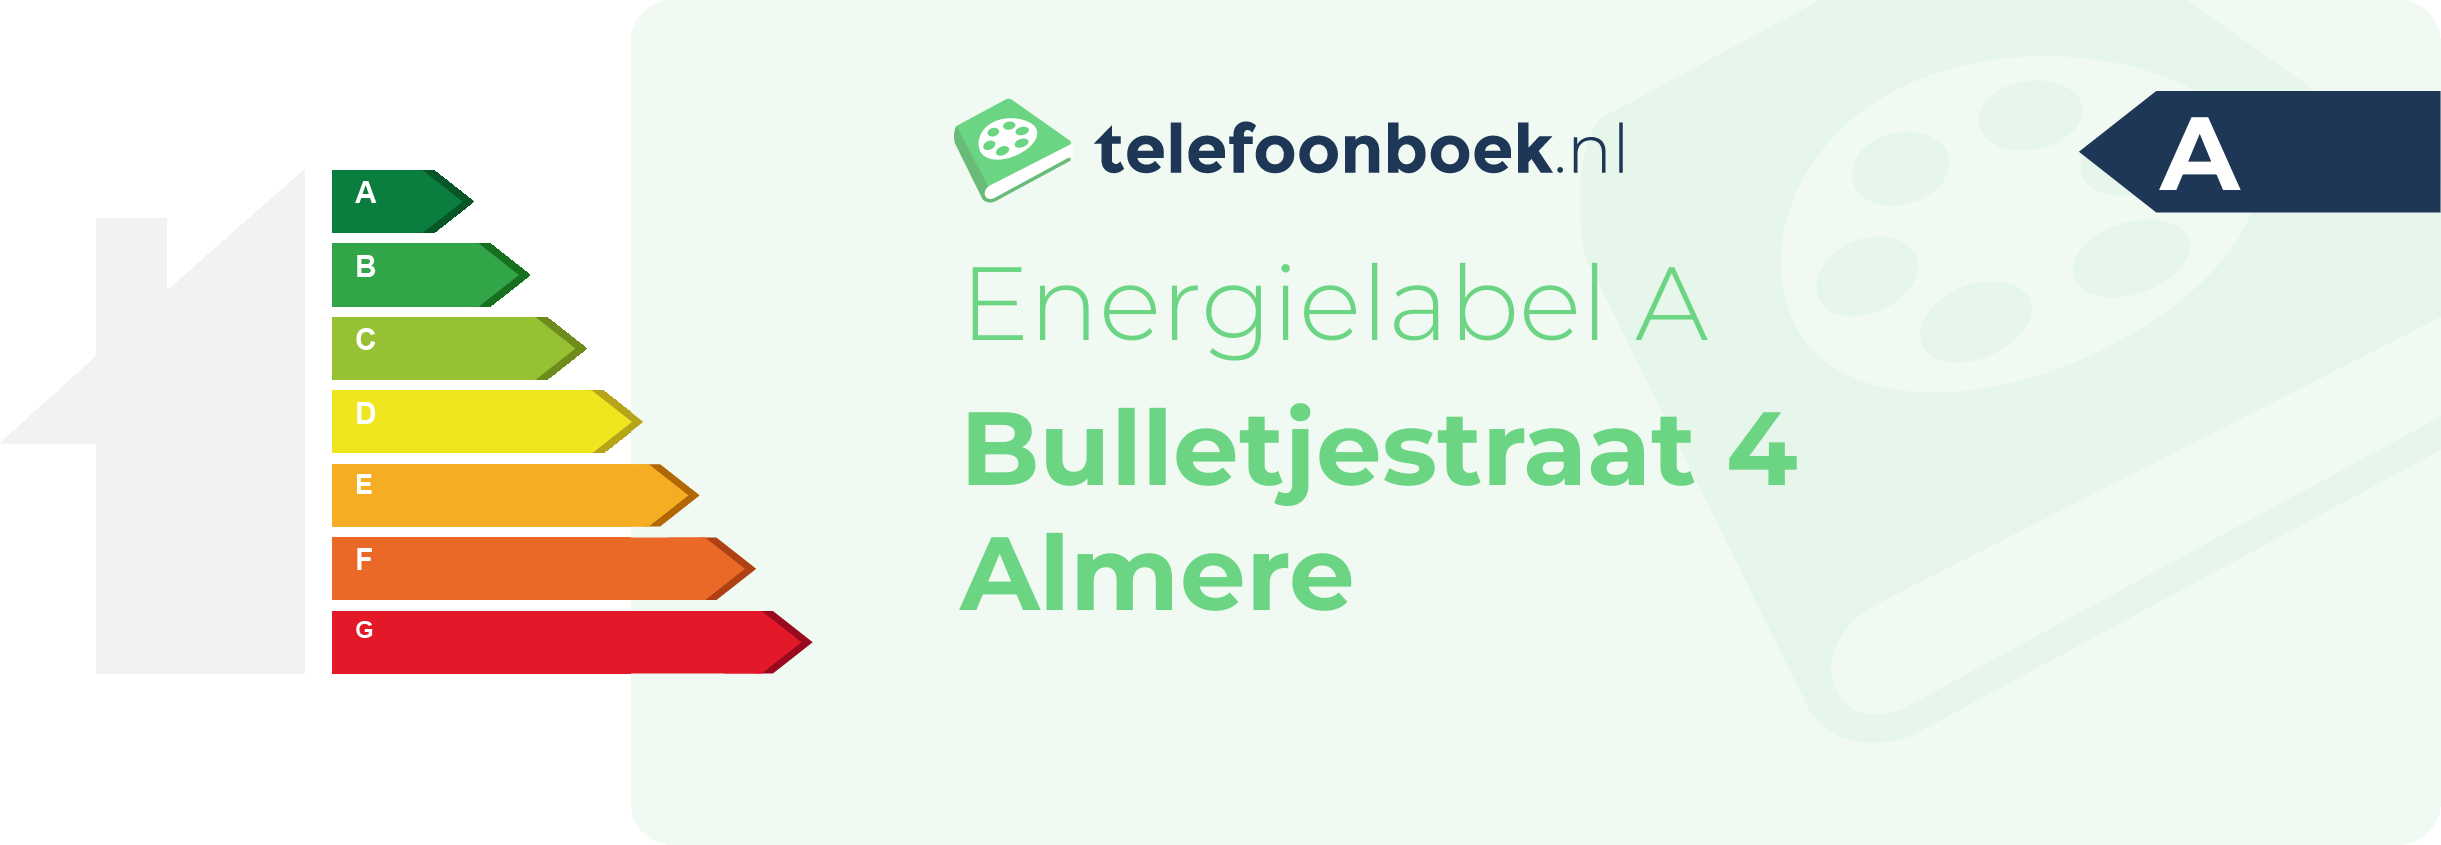 Energielabel Bulletjestraat 4 Almere